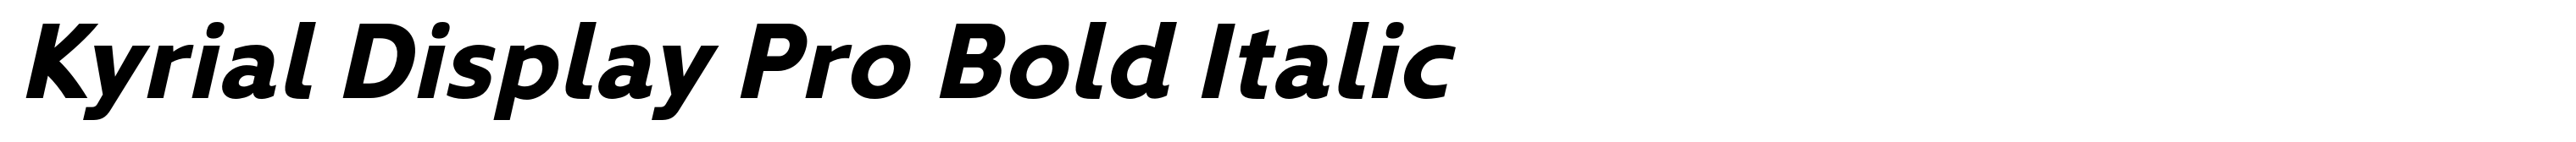 Kyrial Display Pro Bold Italic